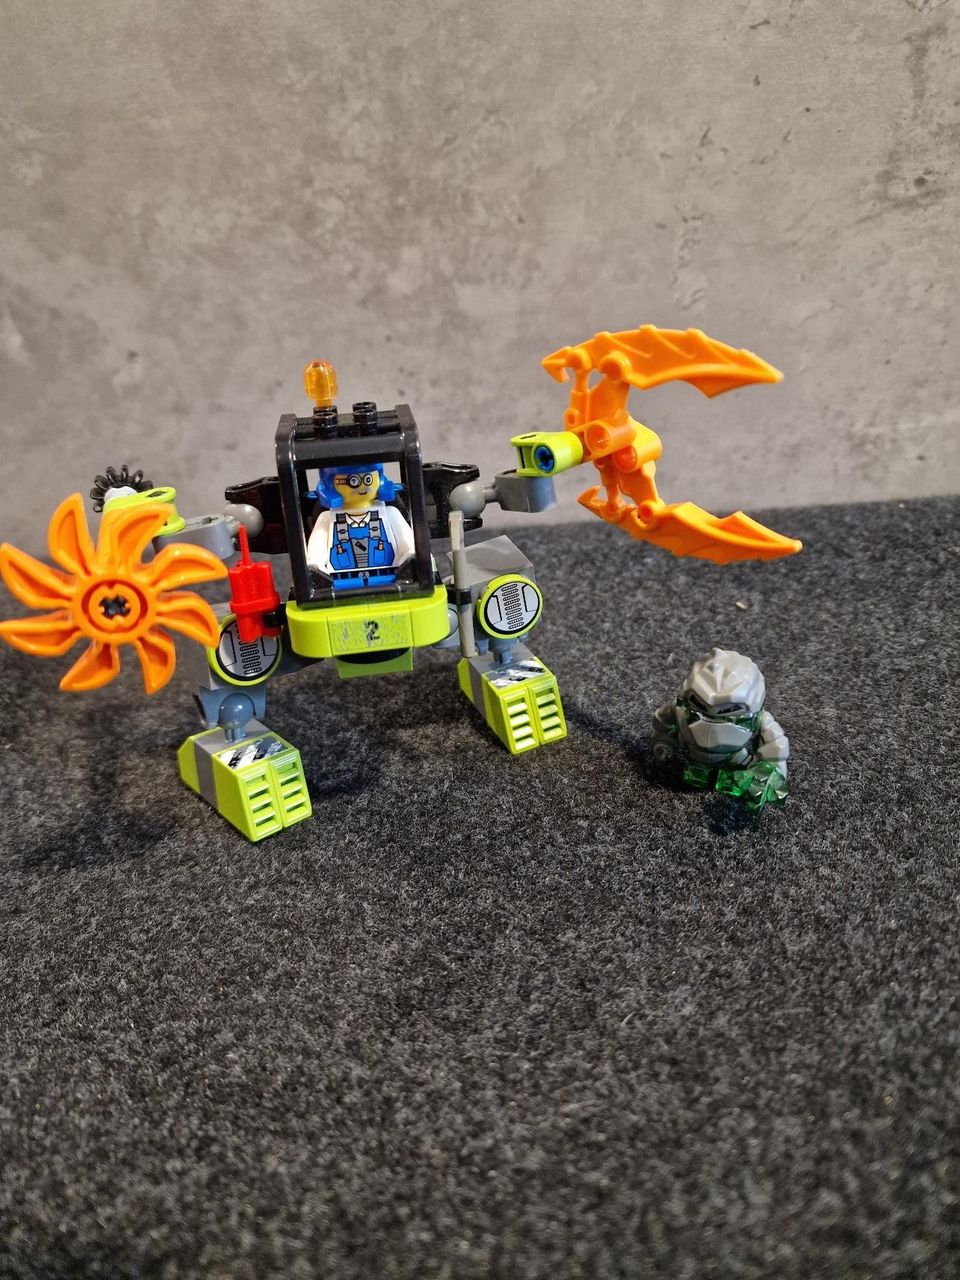 Lego Power Miners 8957